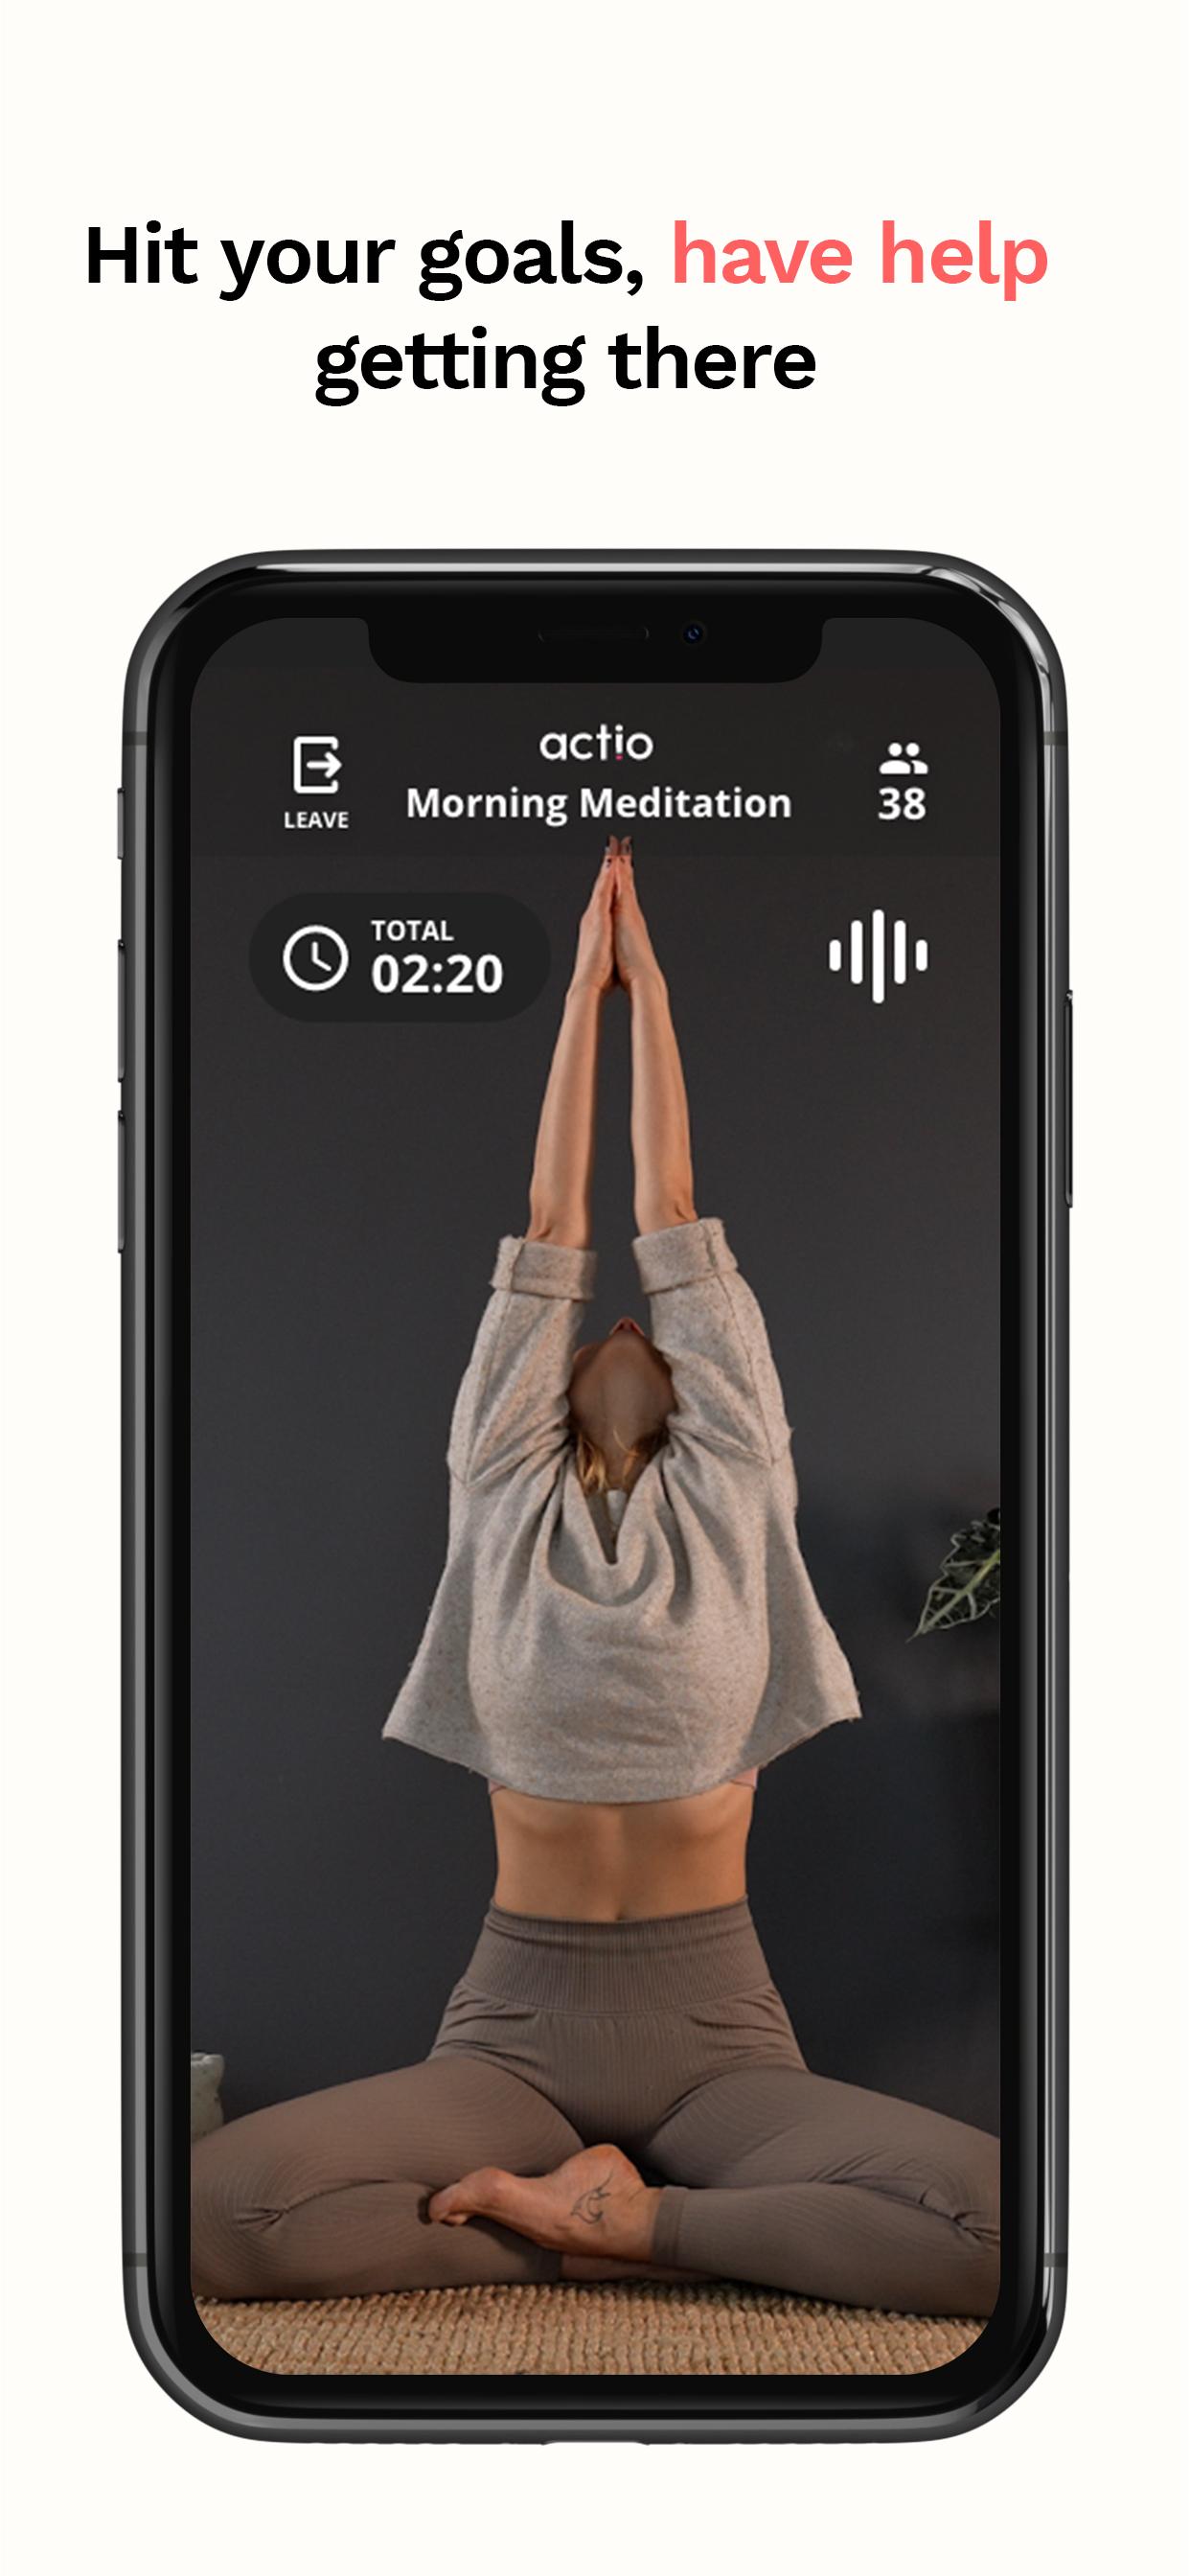 actio: Live Yoga, Meditation, Fitness & More 1.26 Screenshot 6